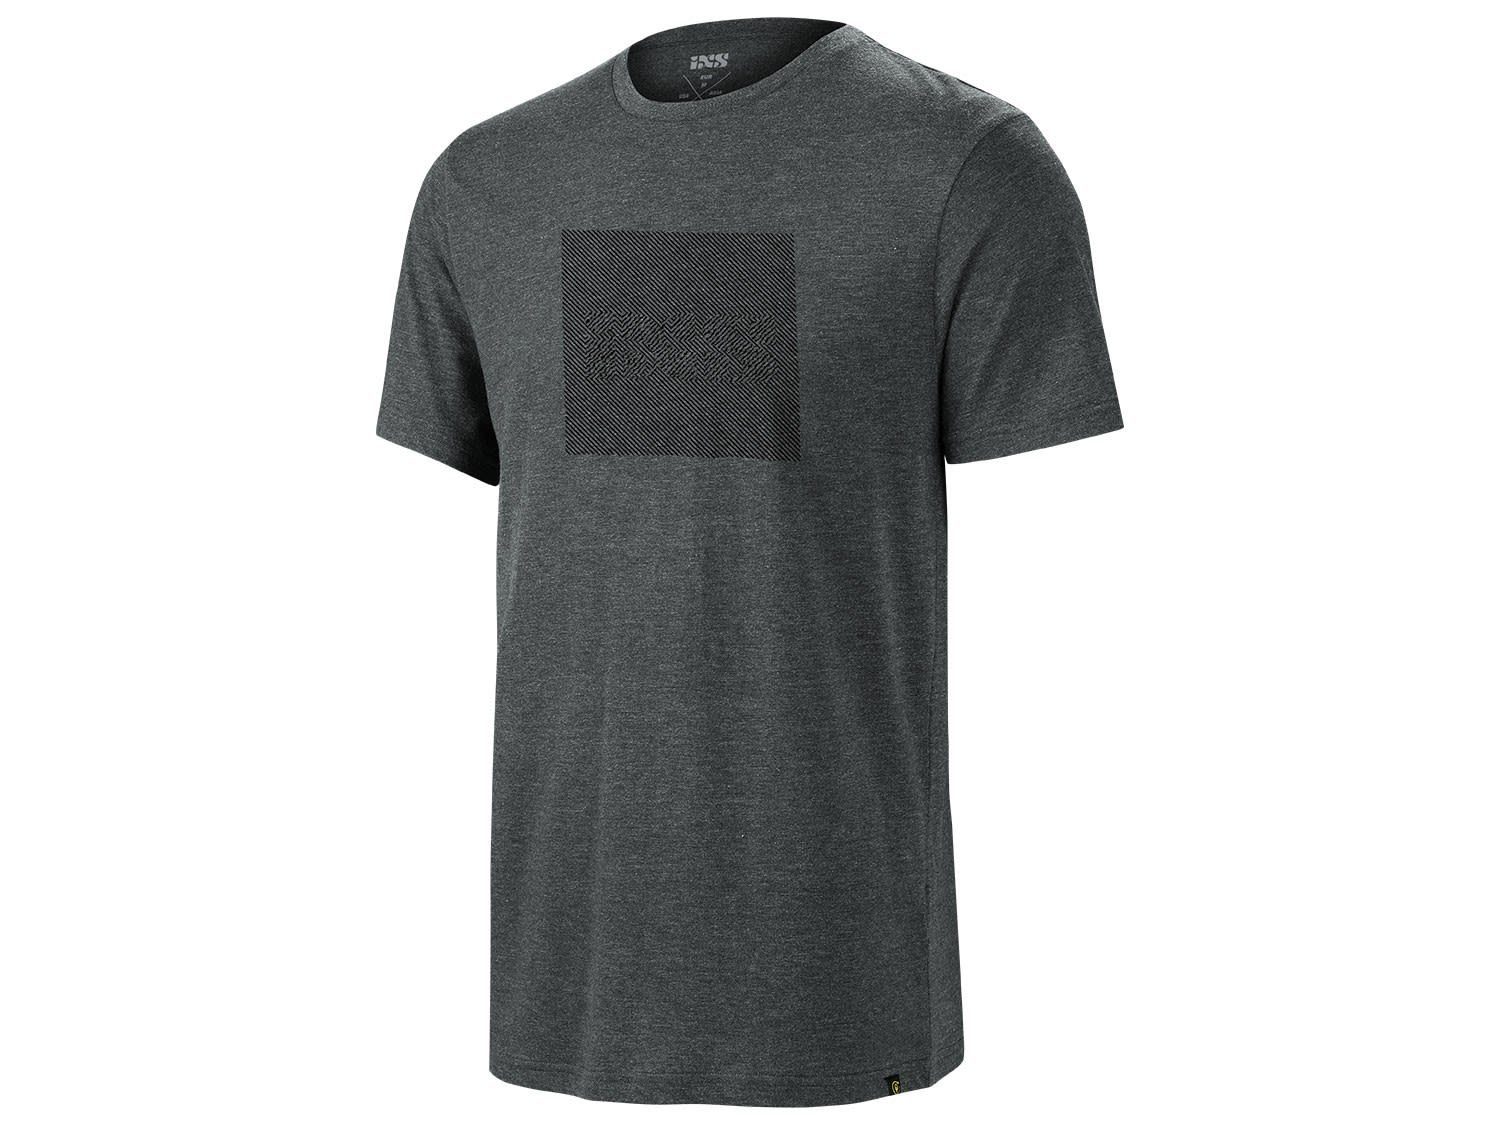 Tee M Kurzarm-Shirt T-Shirt Graphit Herren Ixs Organic Grau IXS Illusion -